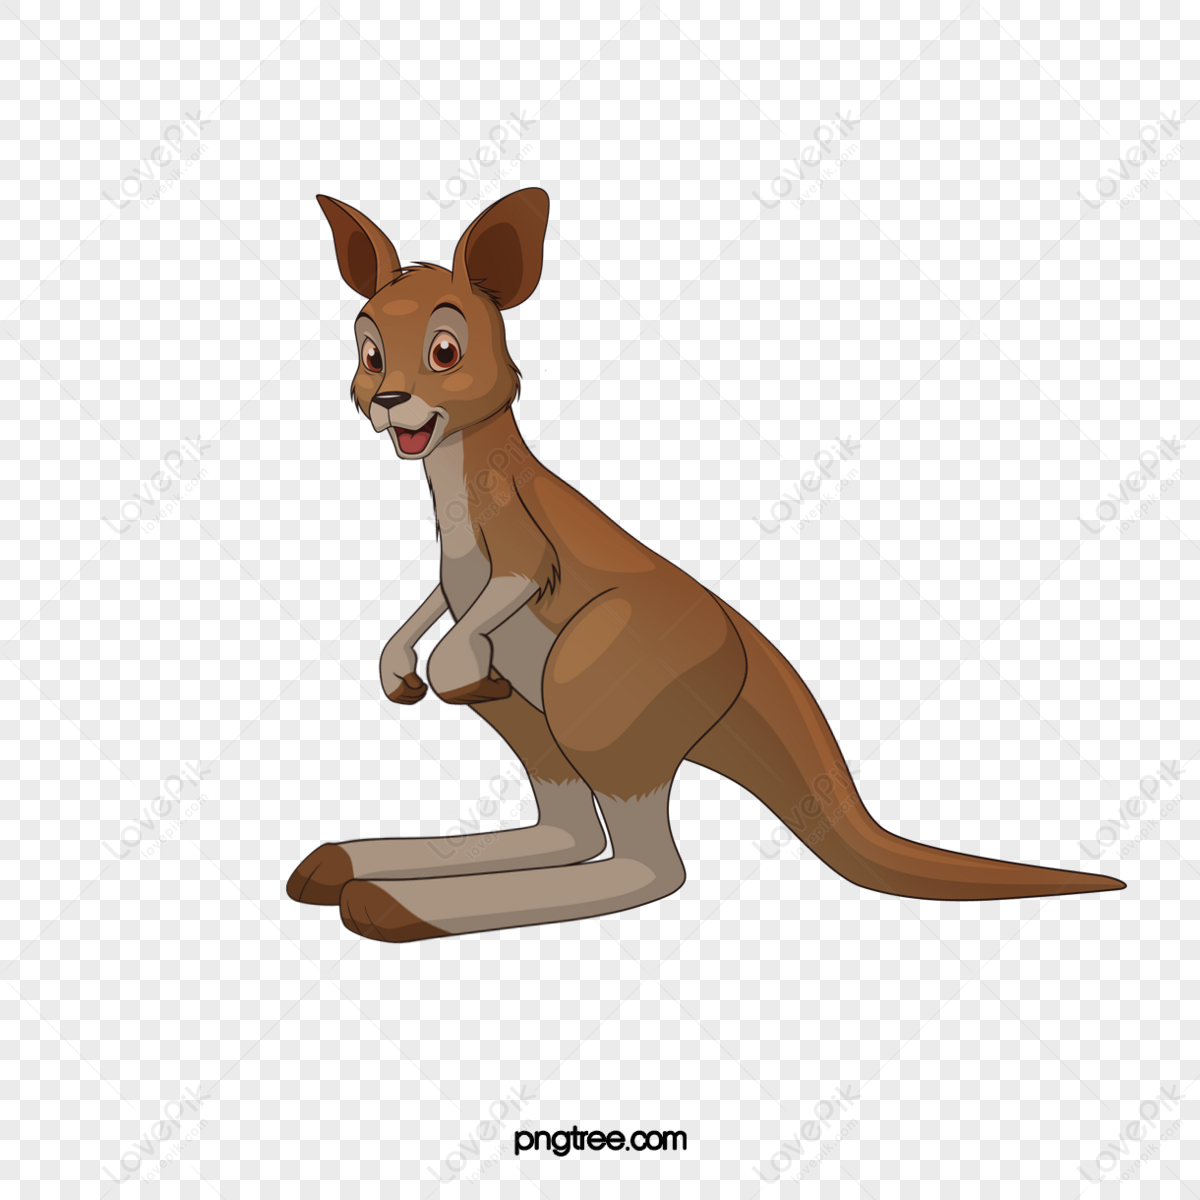 a kangaroo,clip-art,hyena,lettering png image free download